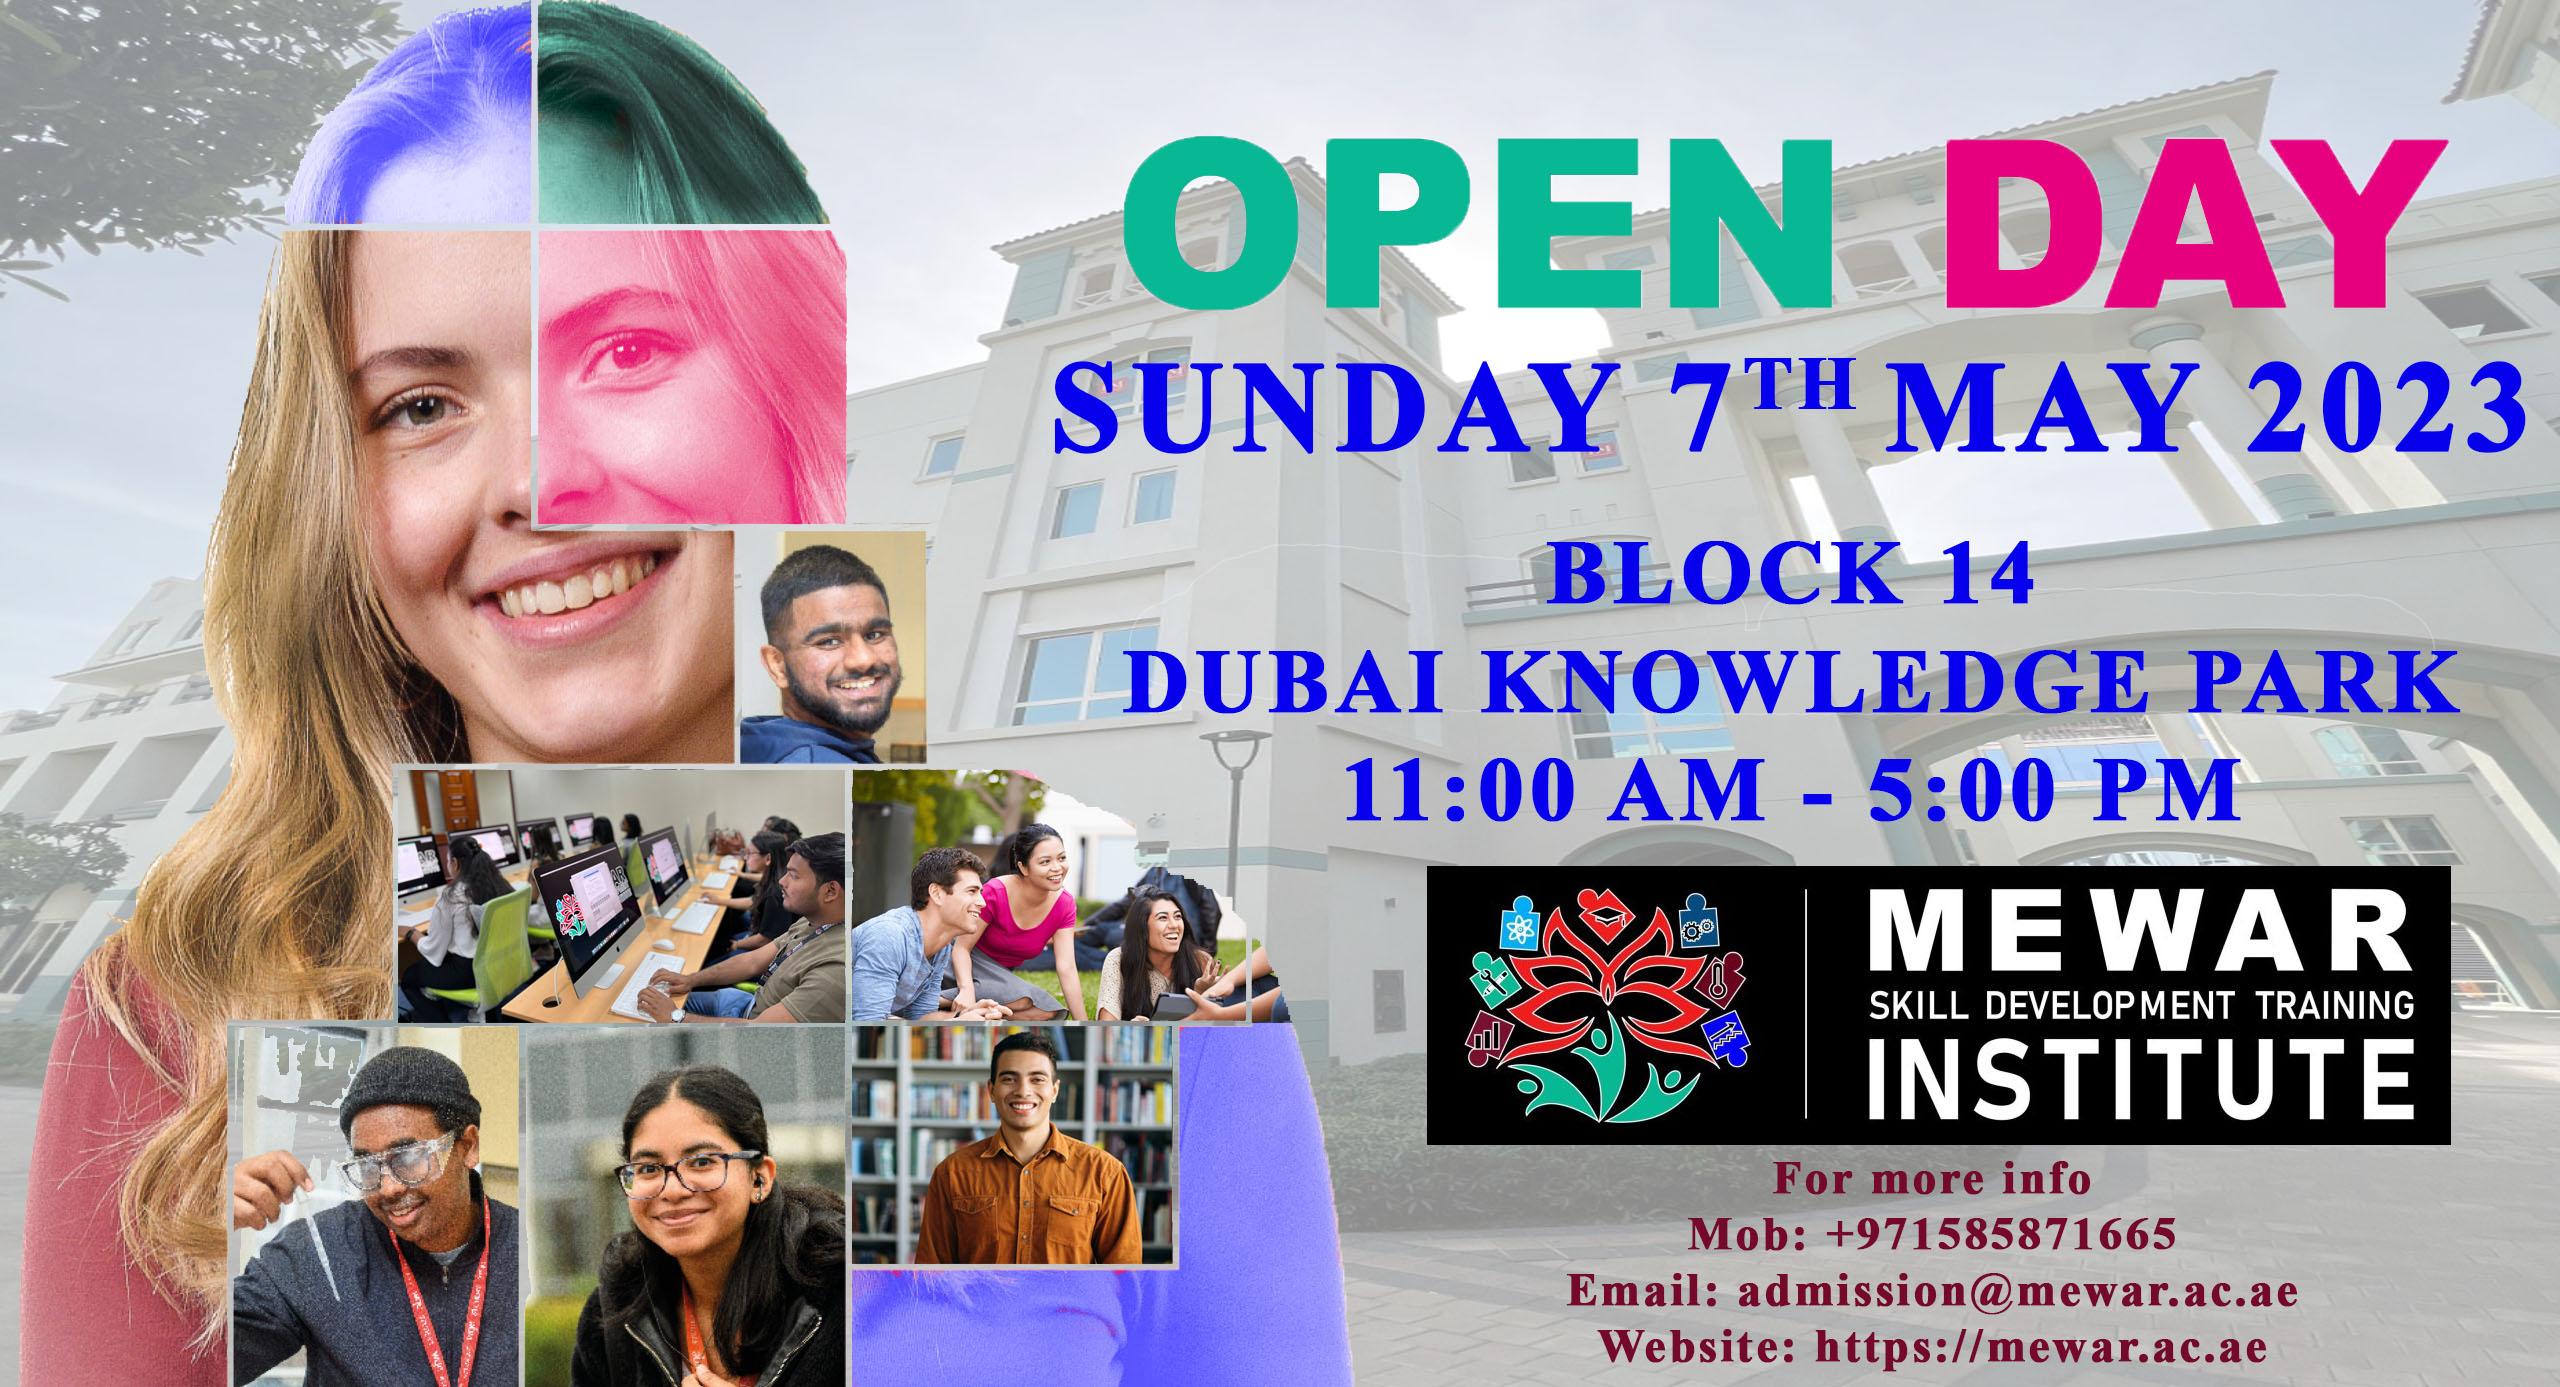 Open day mewar institute dubai knowledge park